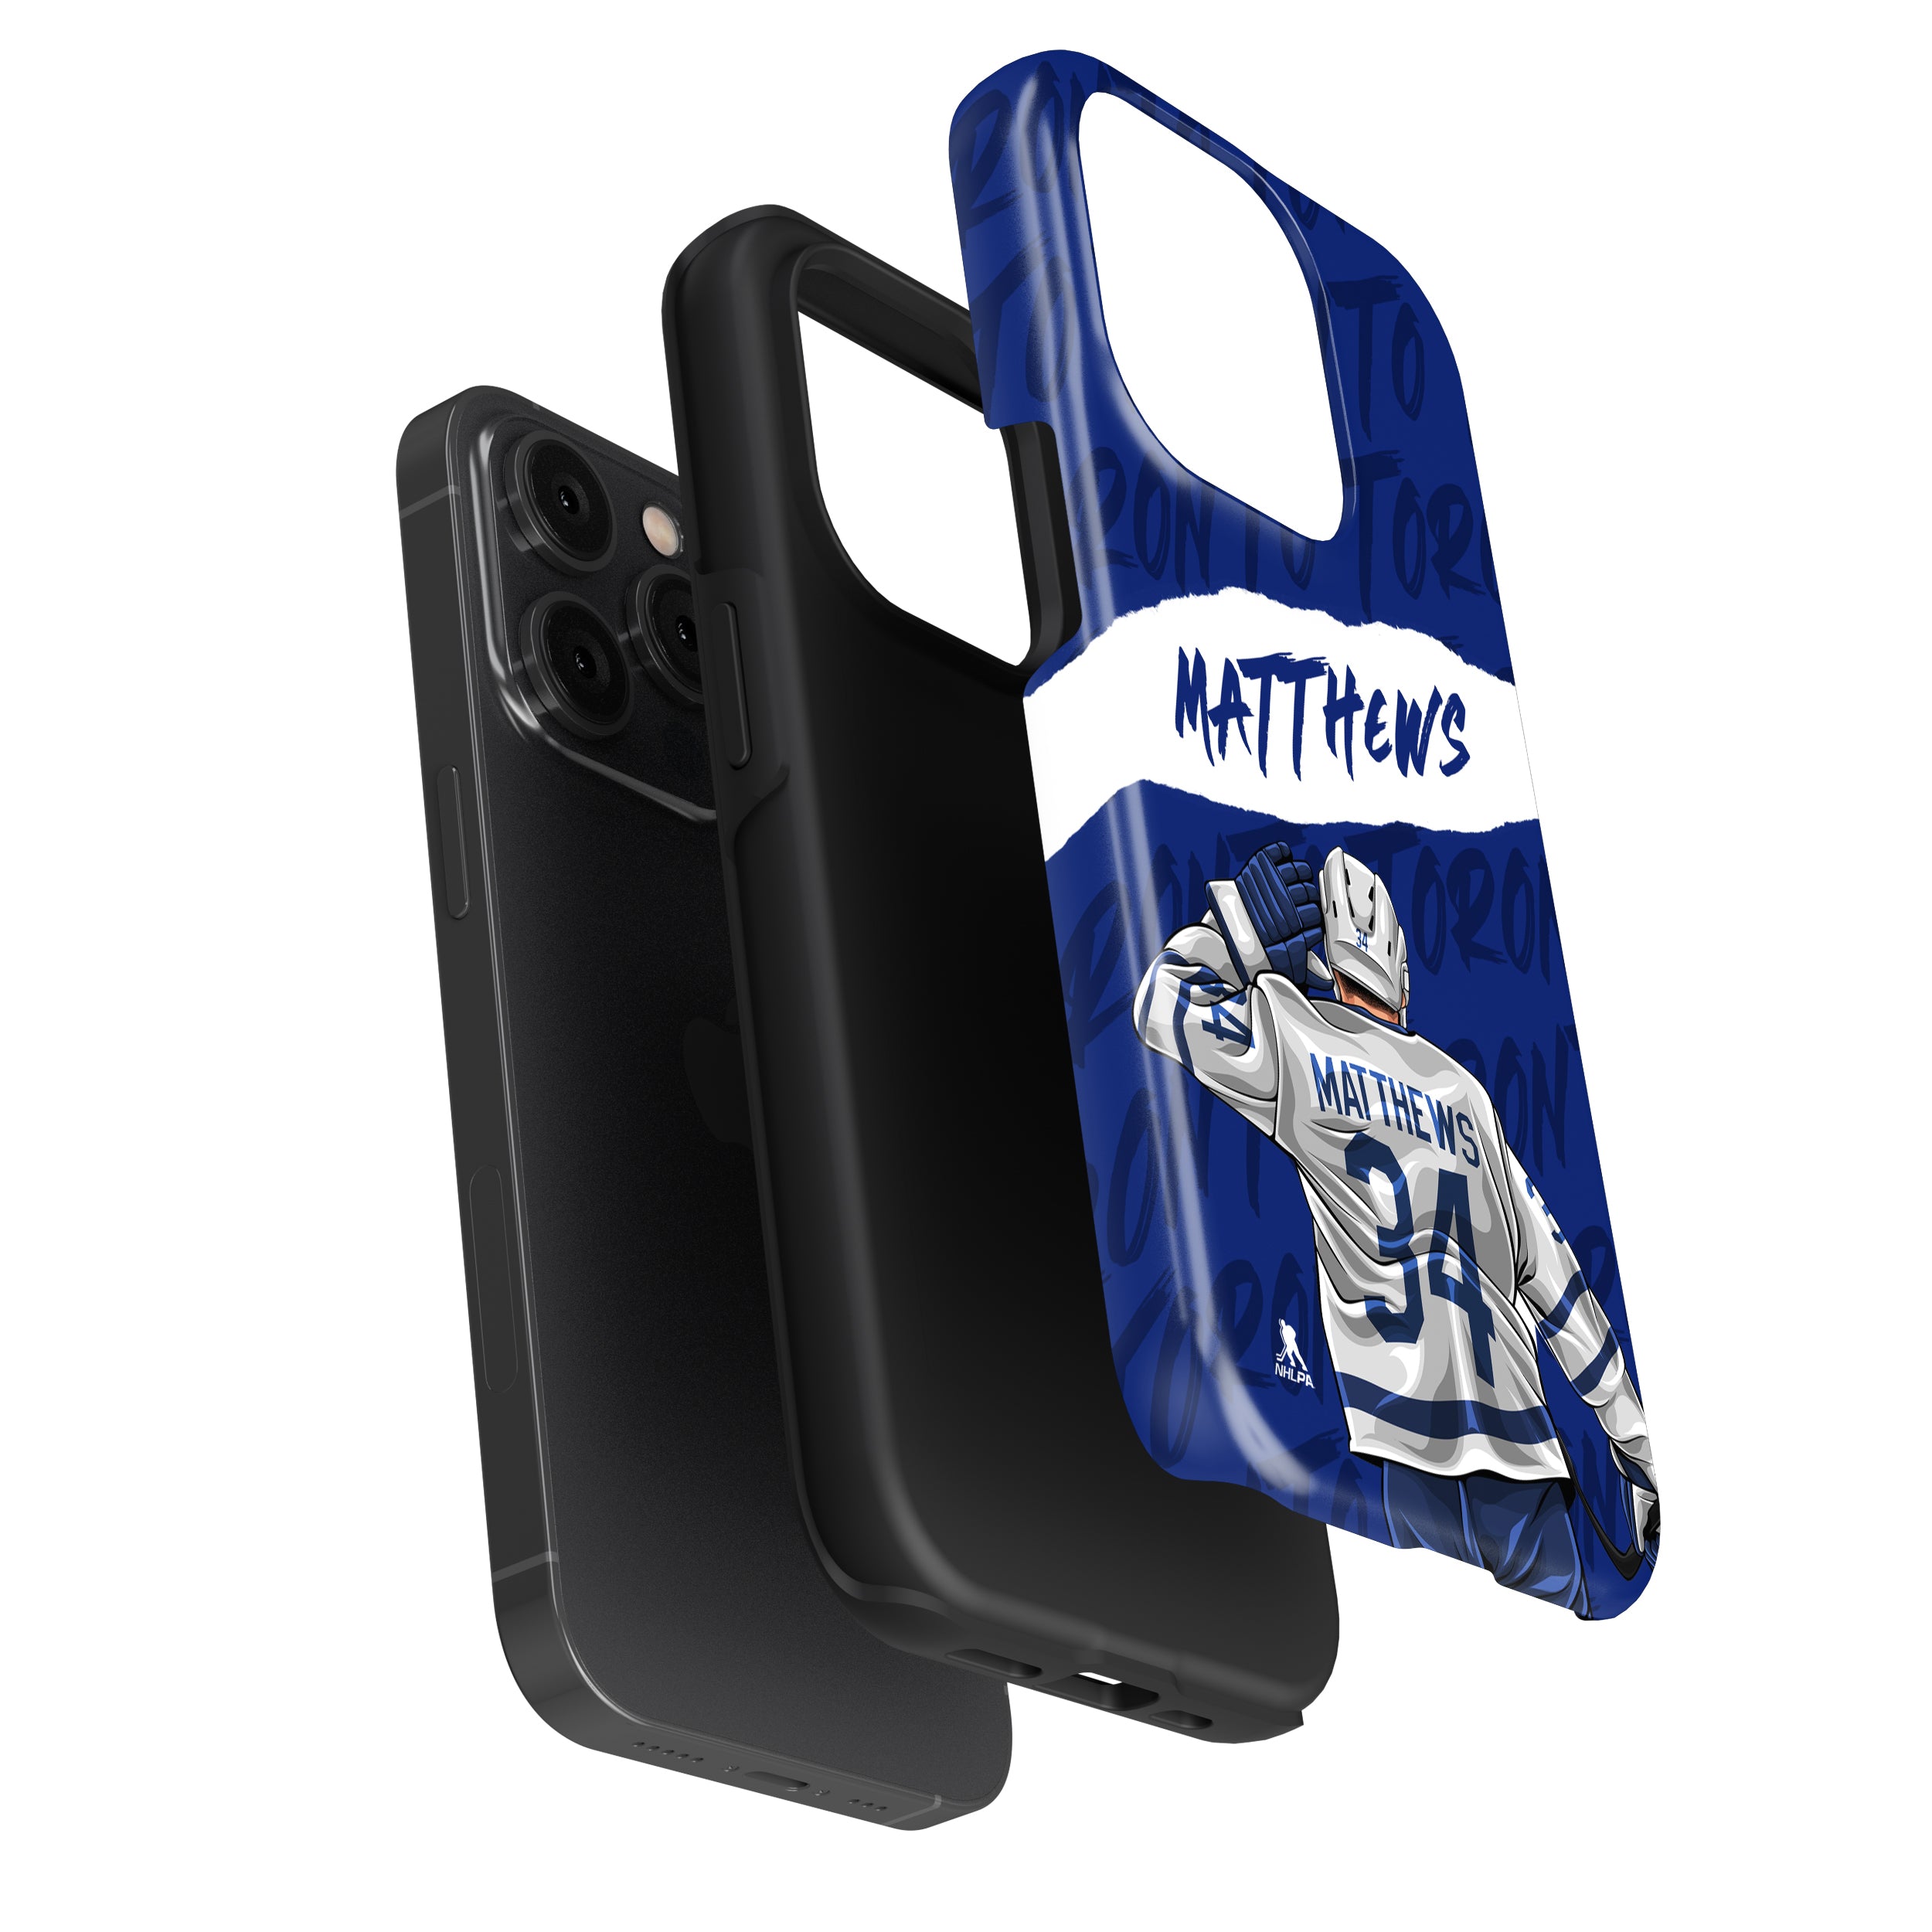 Matthews Star Series 3.0 Phone Case